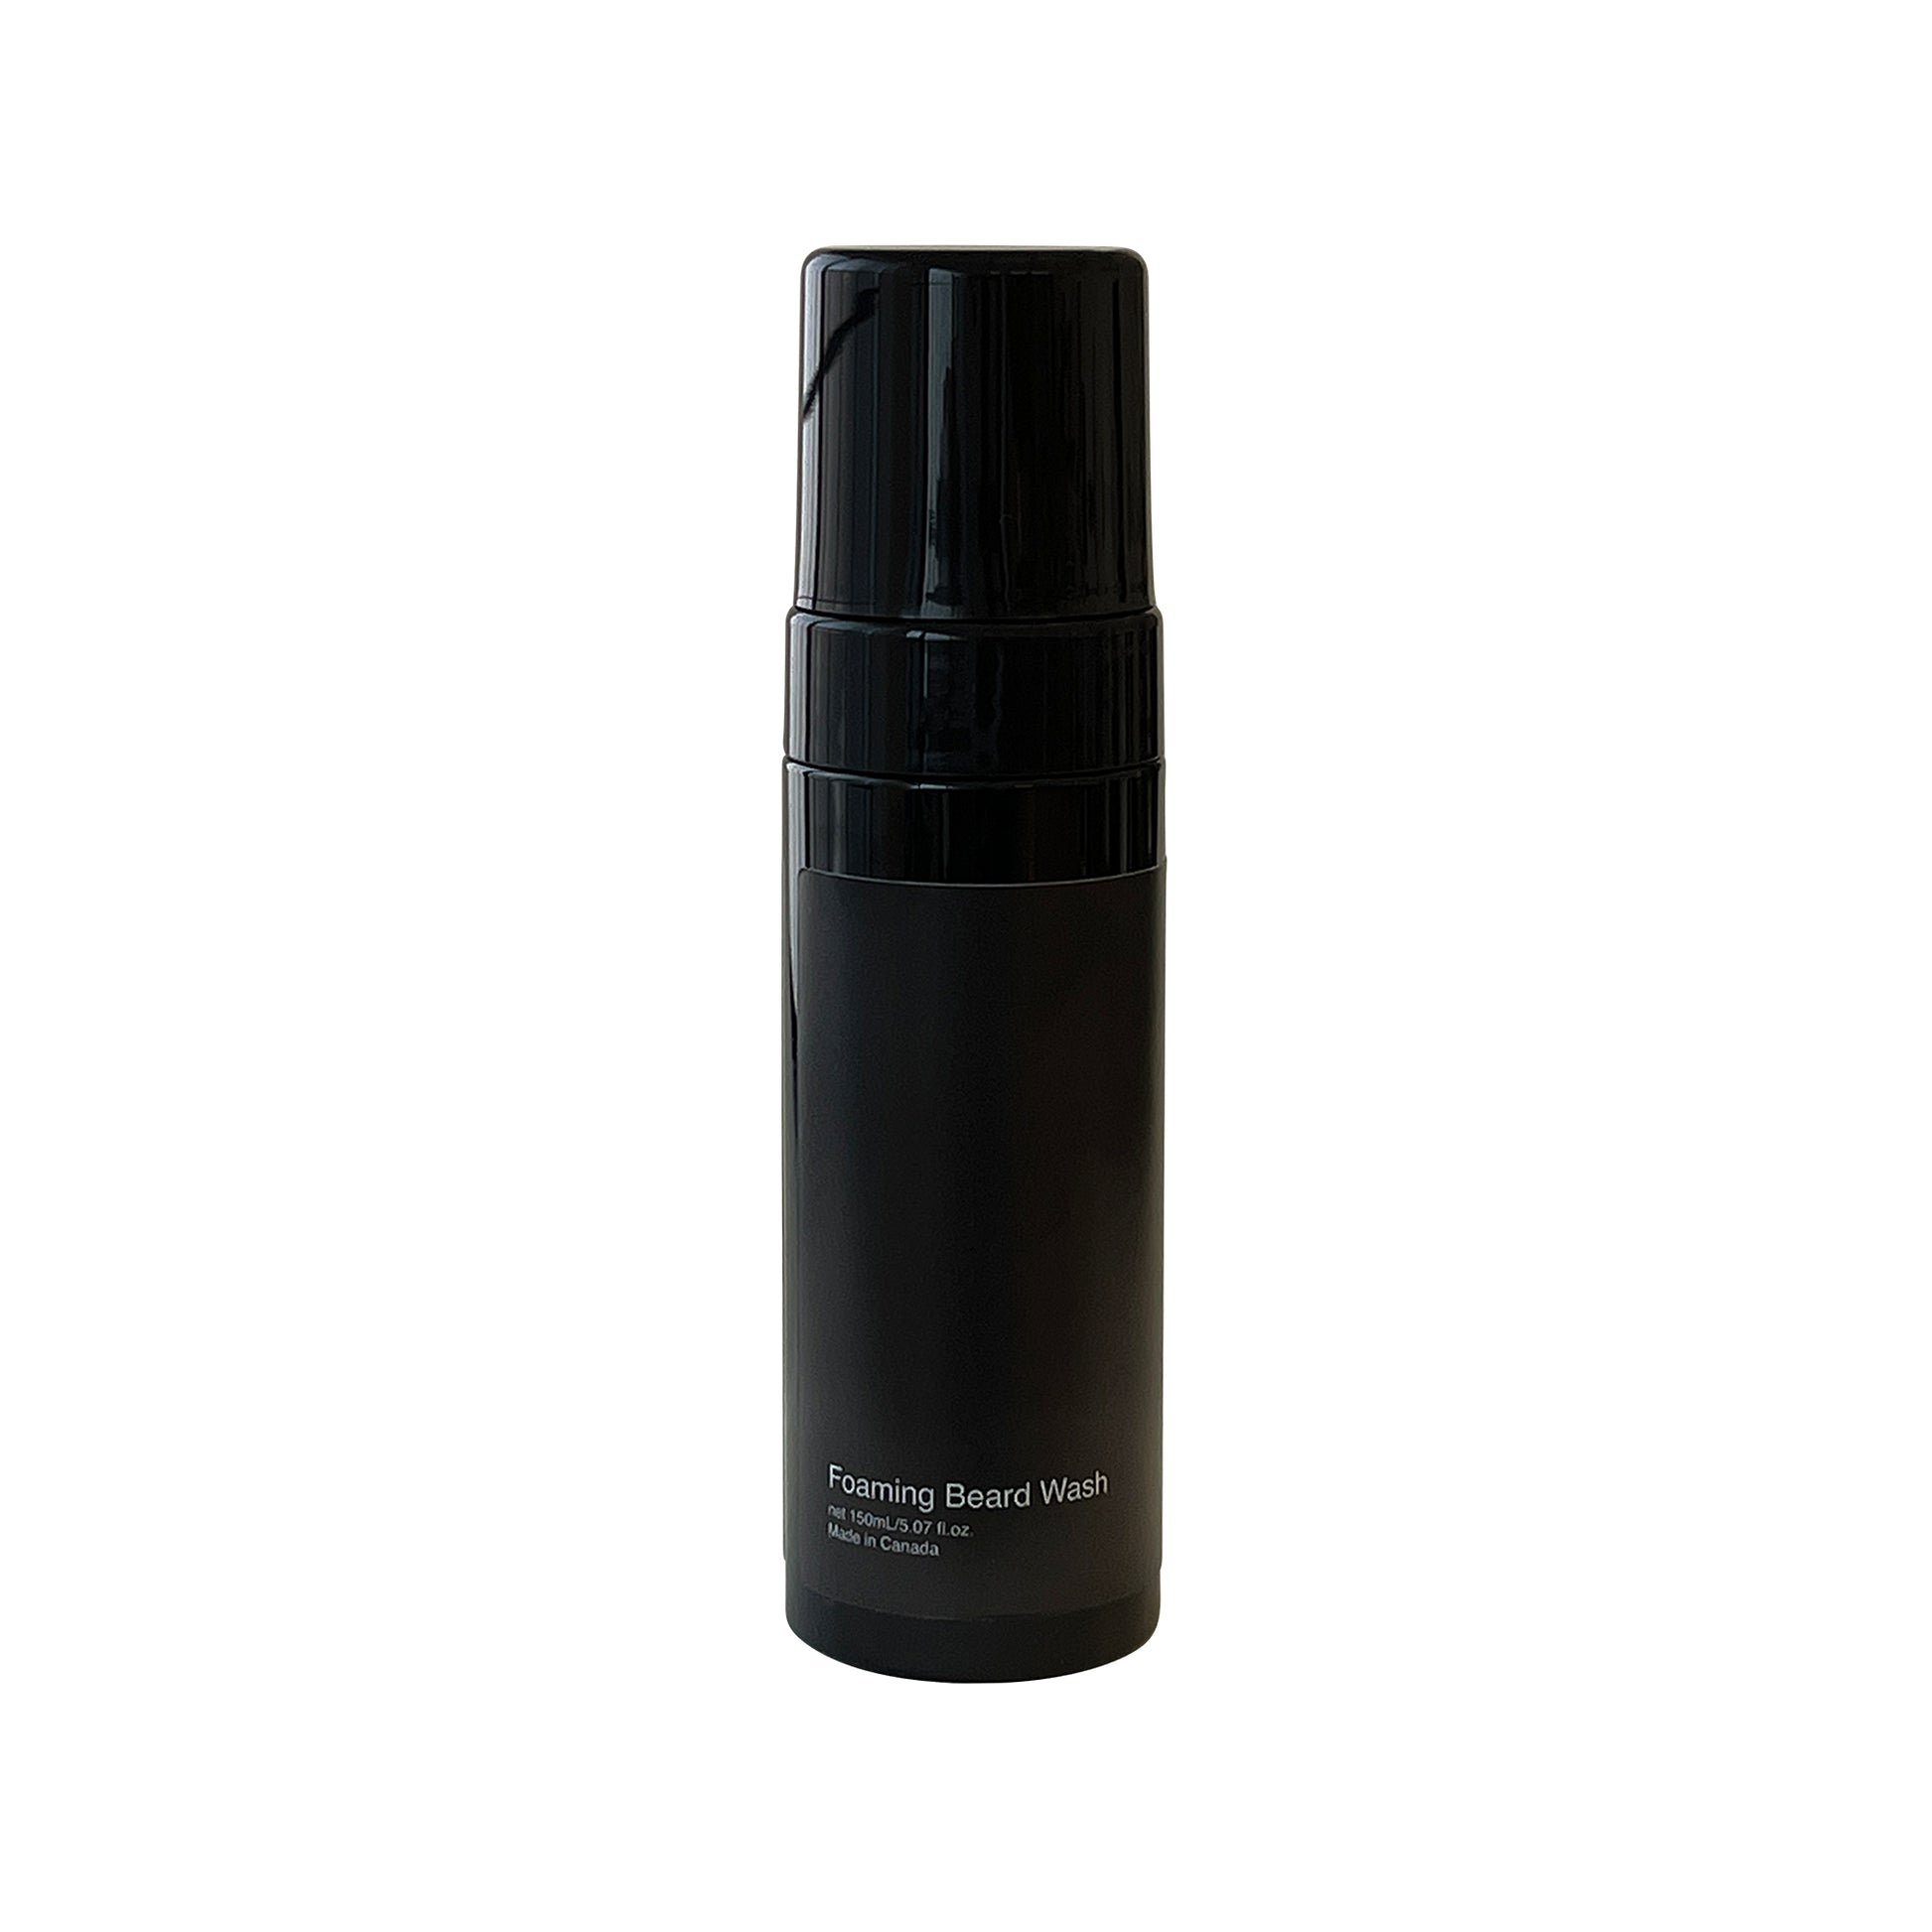 Black bottle with beard wash on white surface